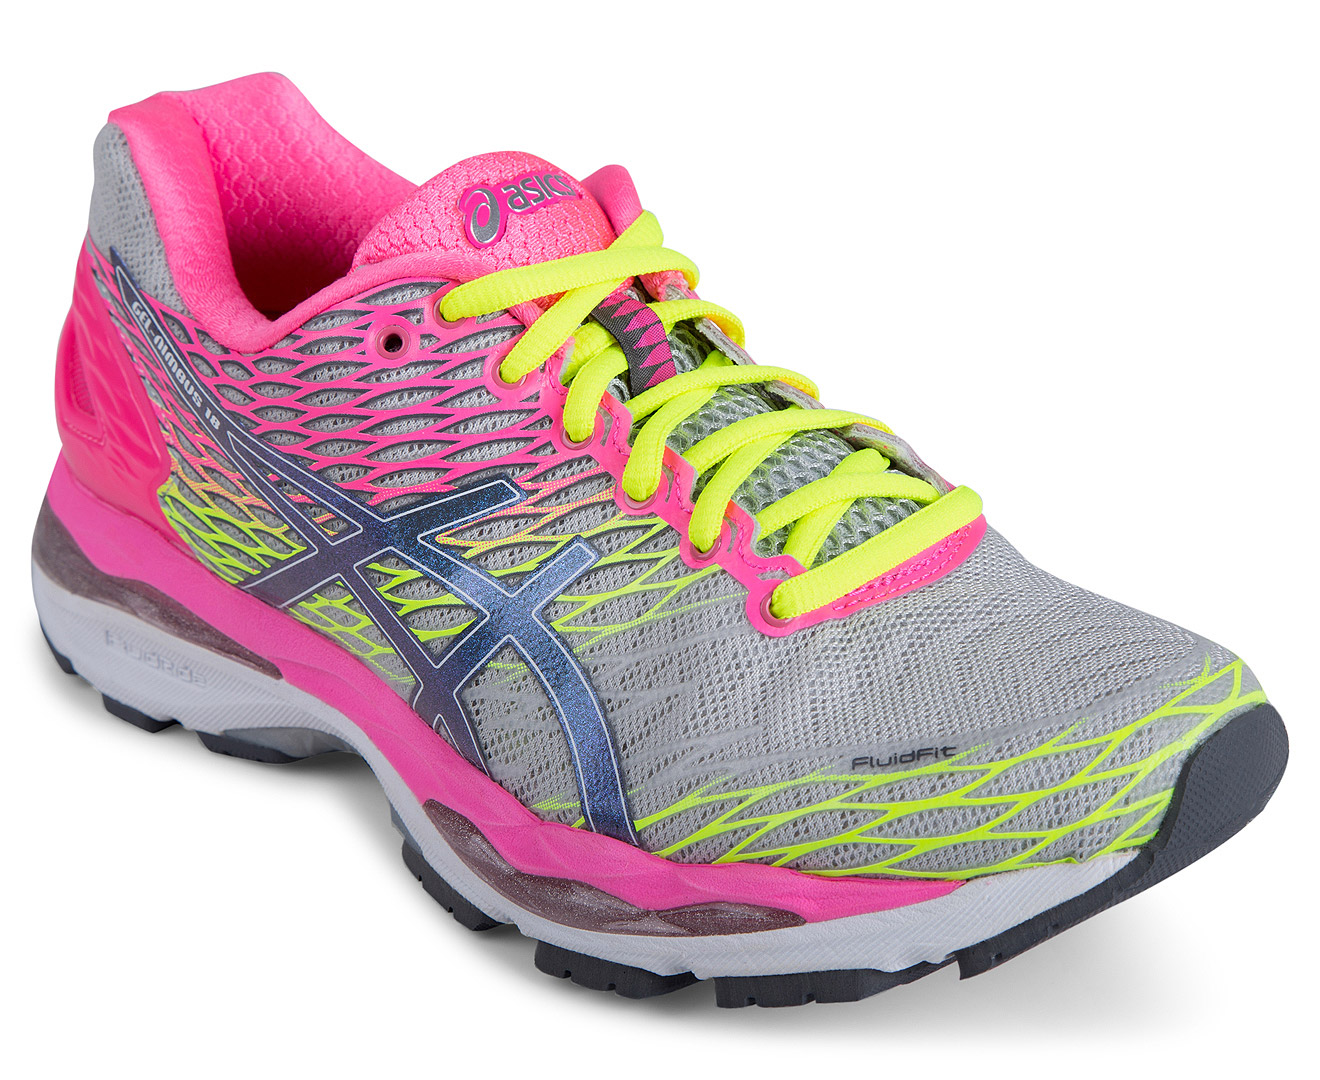 ASICS Women's GEL-Nimbus 18 Shoe - Silver/Titanium/Hot Pink | Catch.com.au